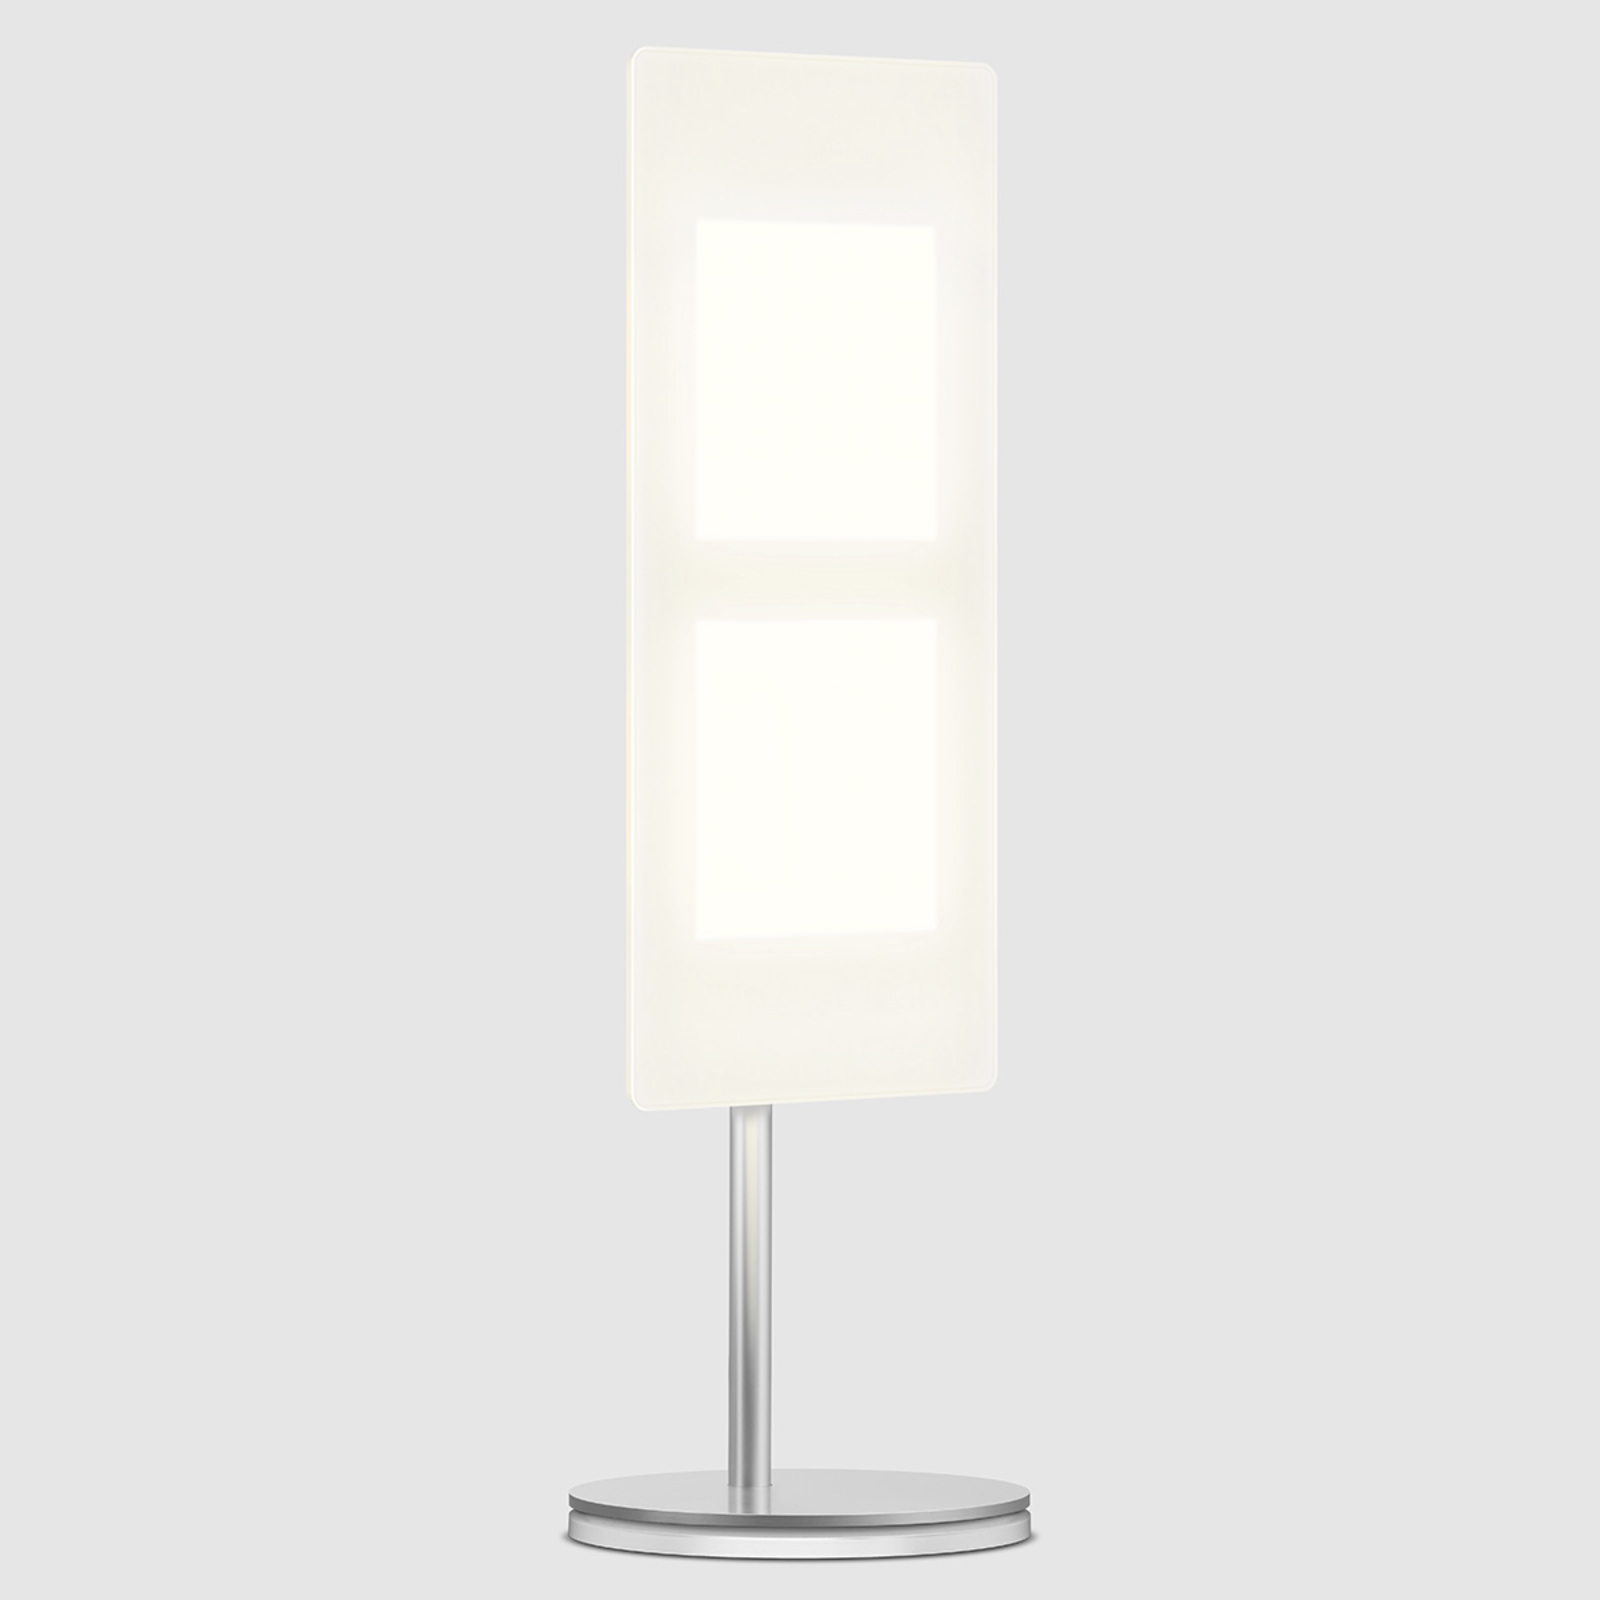 47,8 cm hoge OLED tafellamp OMLED One t2, wit